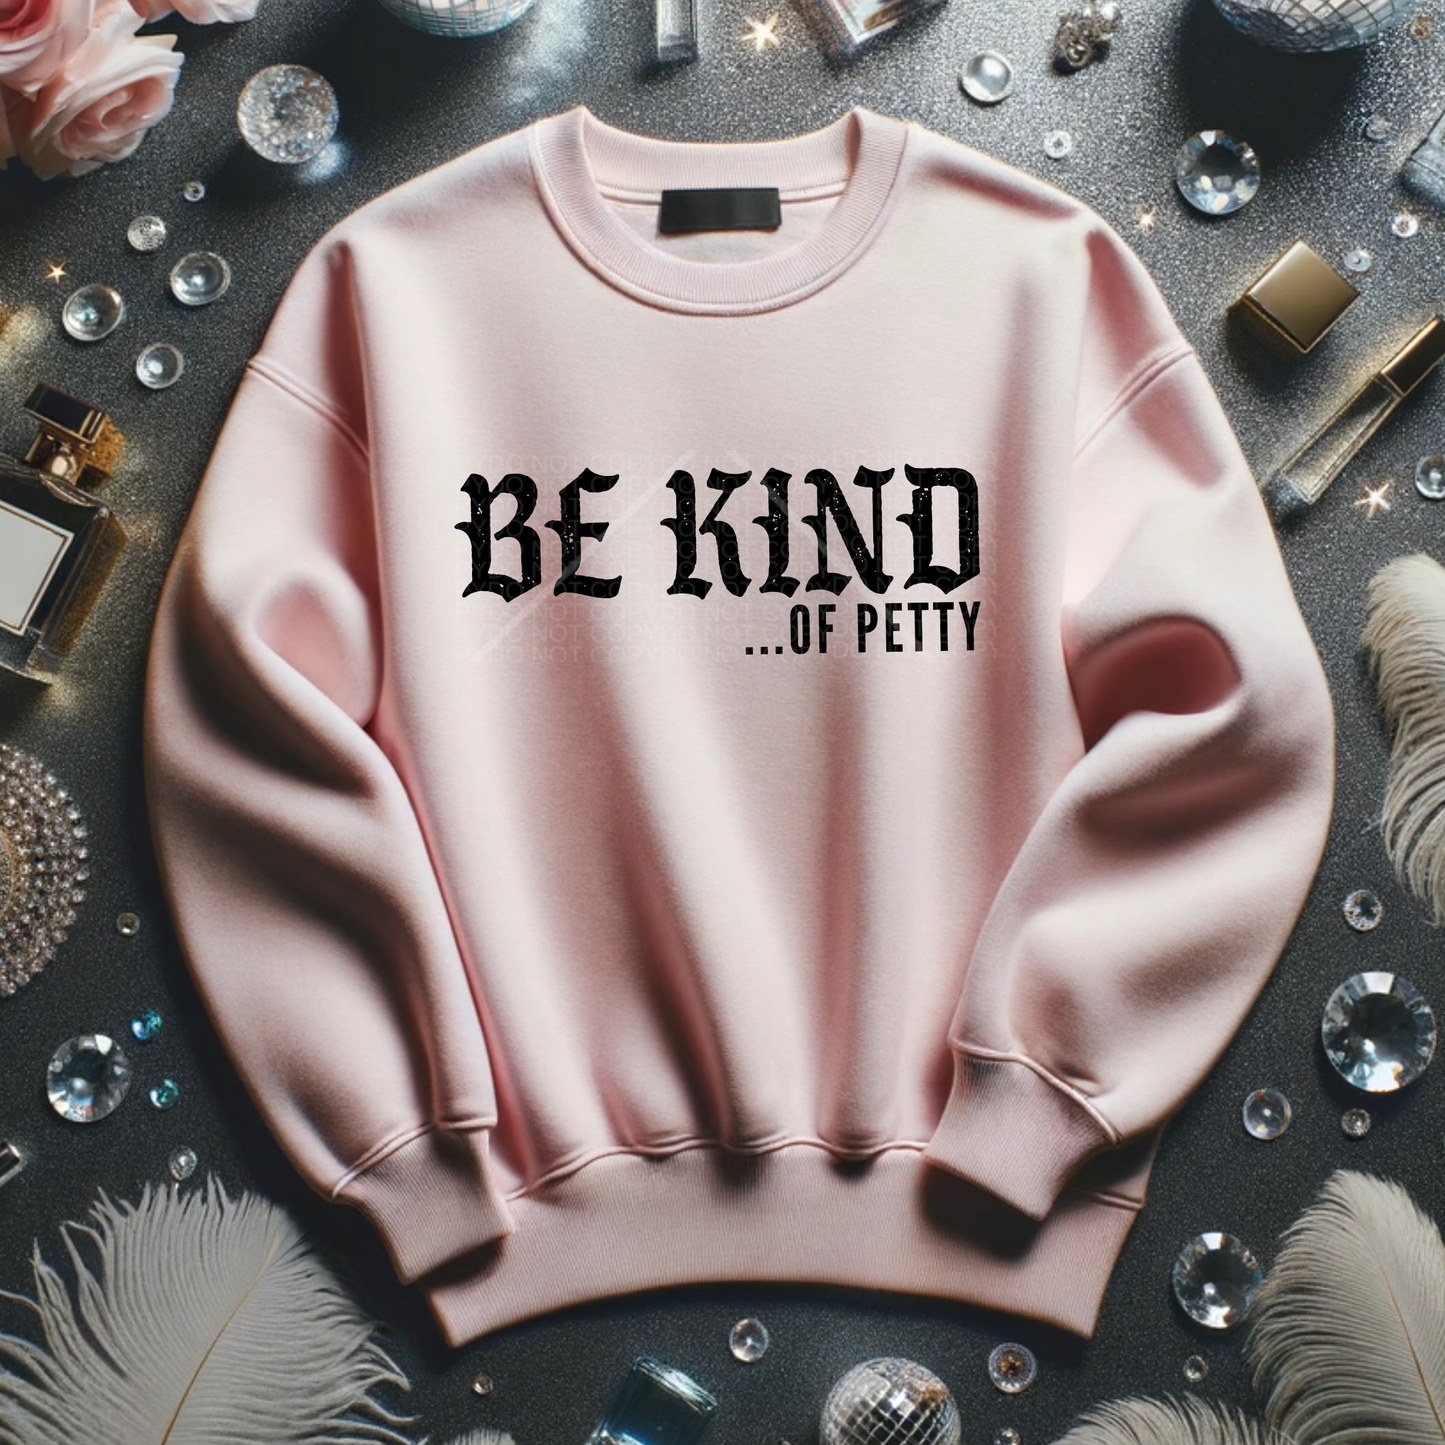 Be Kind of Petty T-Shirt or Sweatshirt